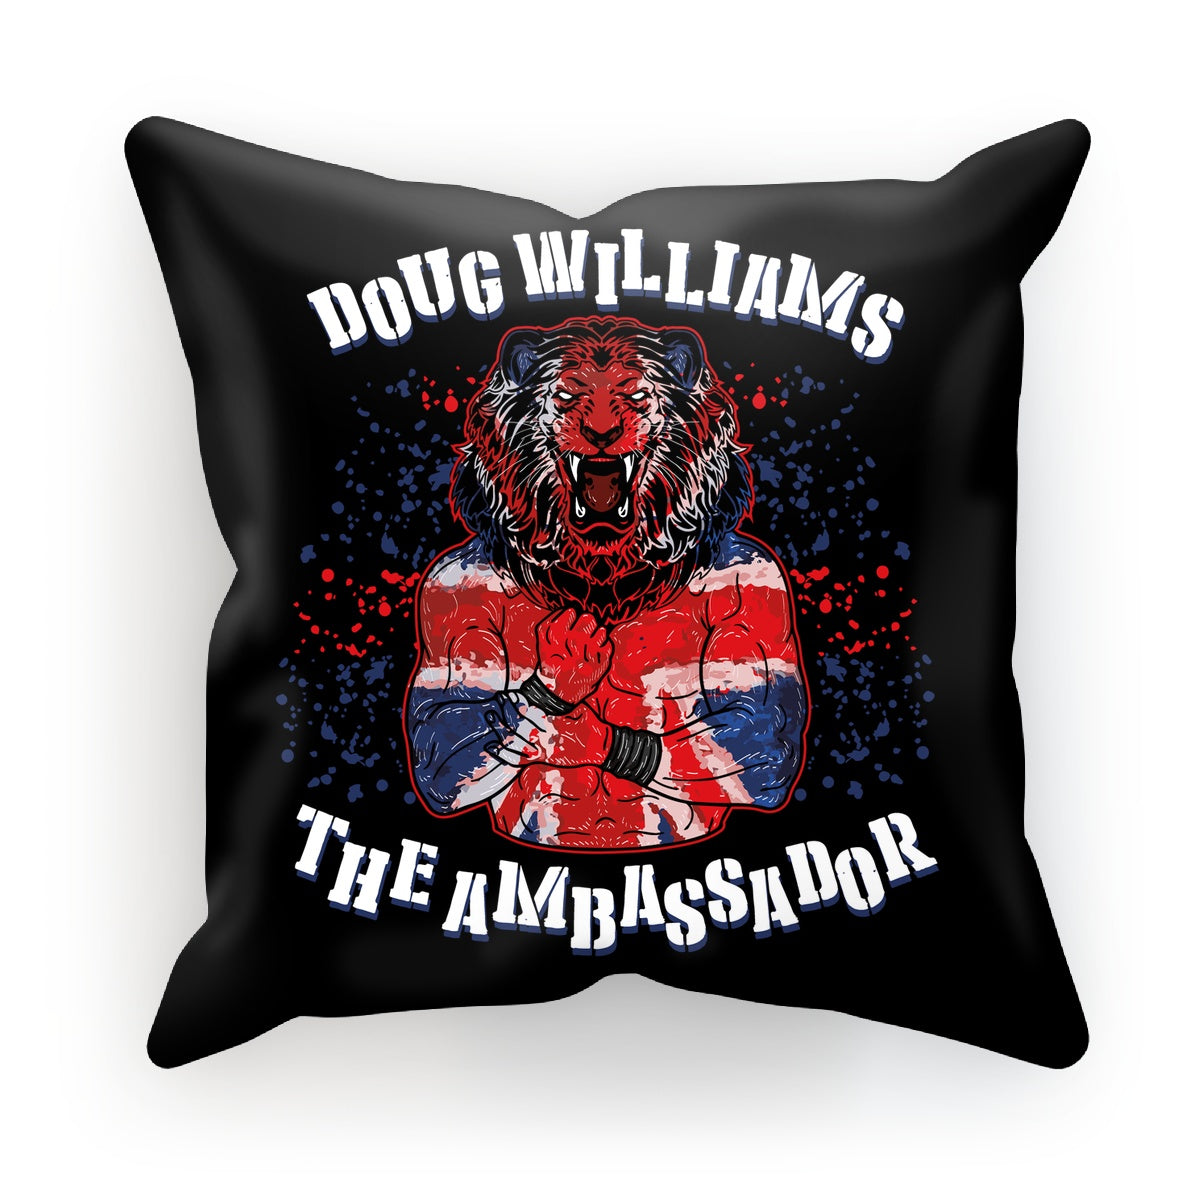 Doug Williams The Ambassador  Cushion